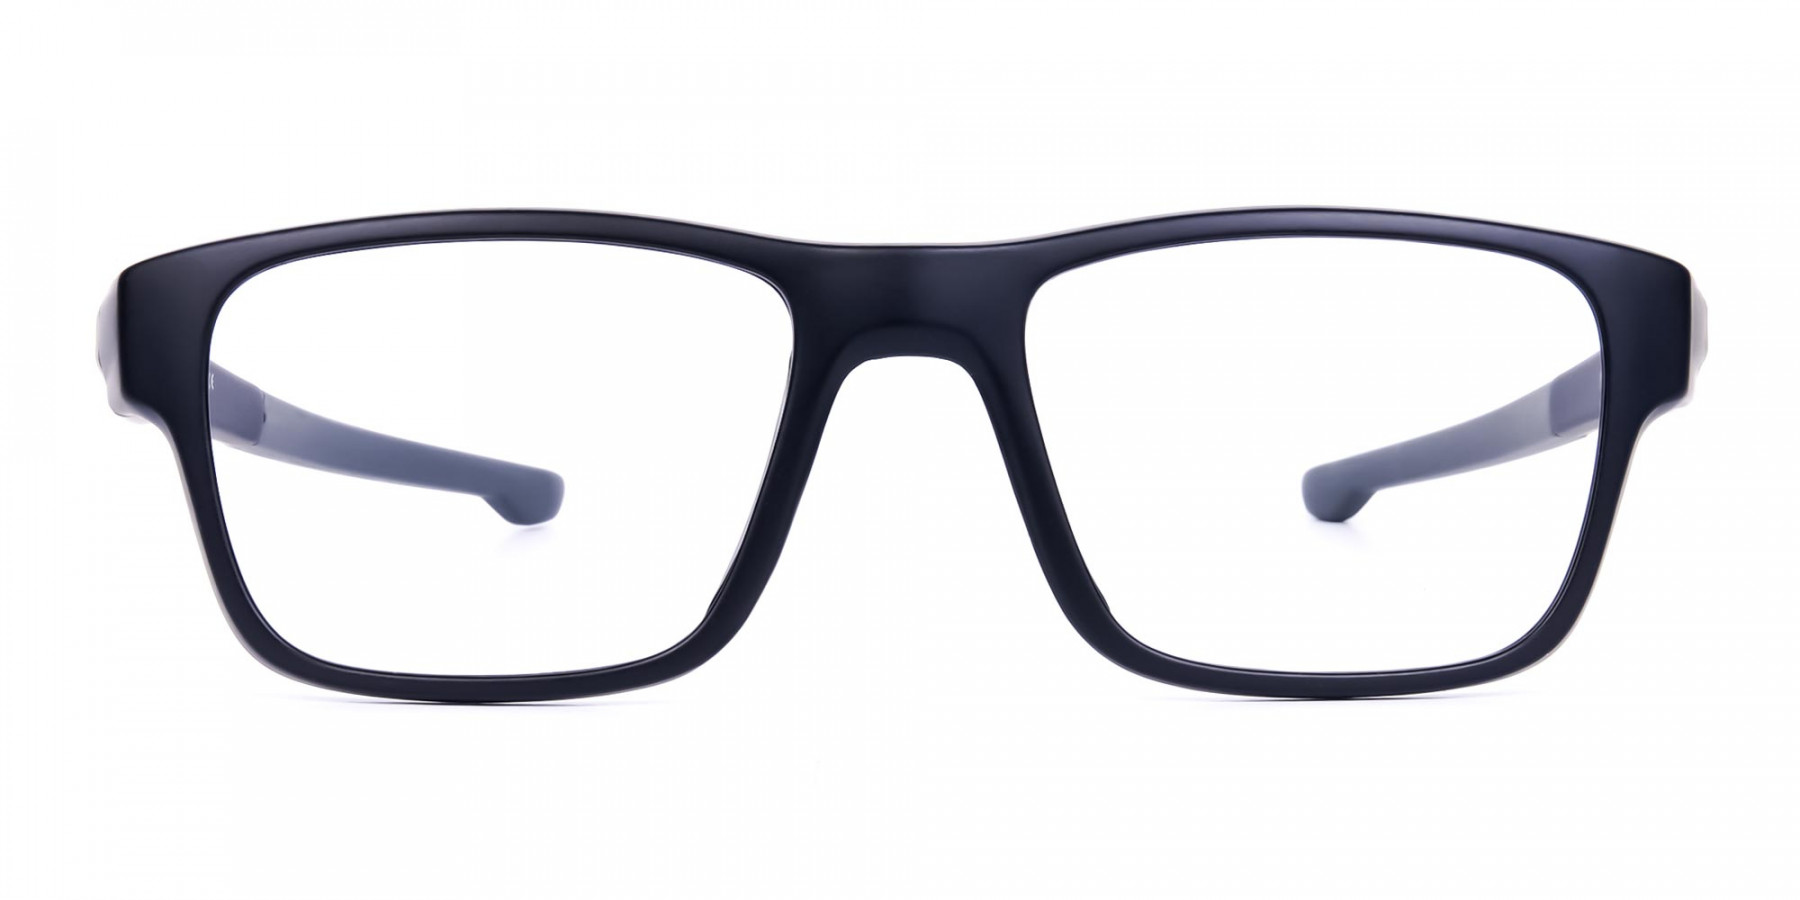 Rectangular Matte Black and Grey sports goggles-1